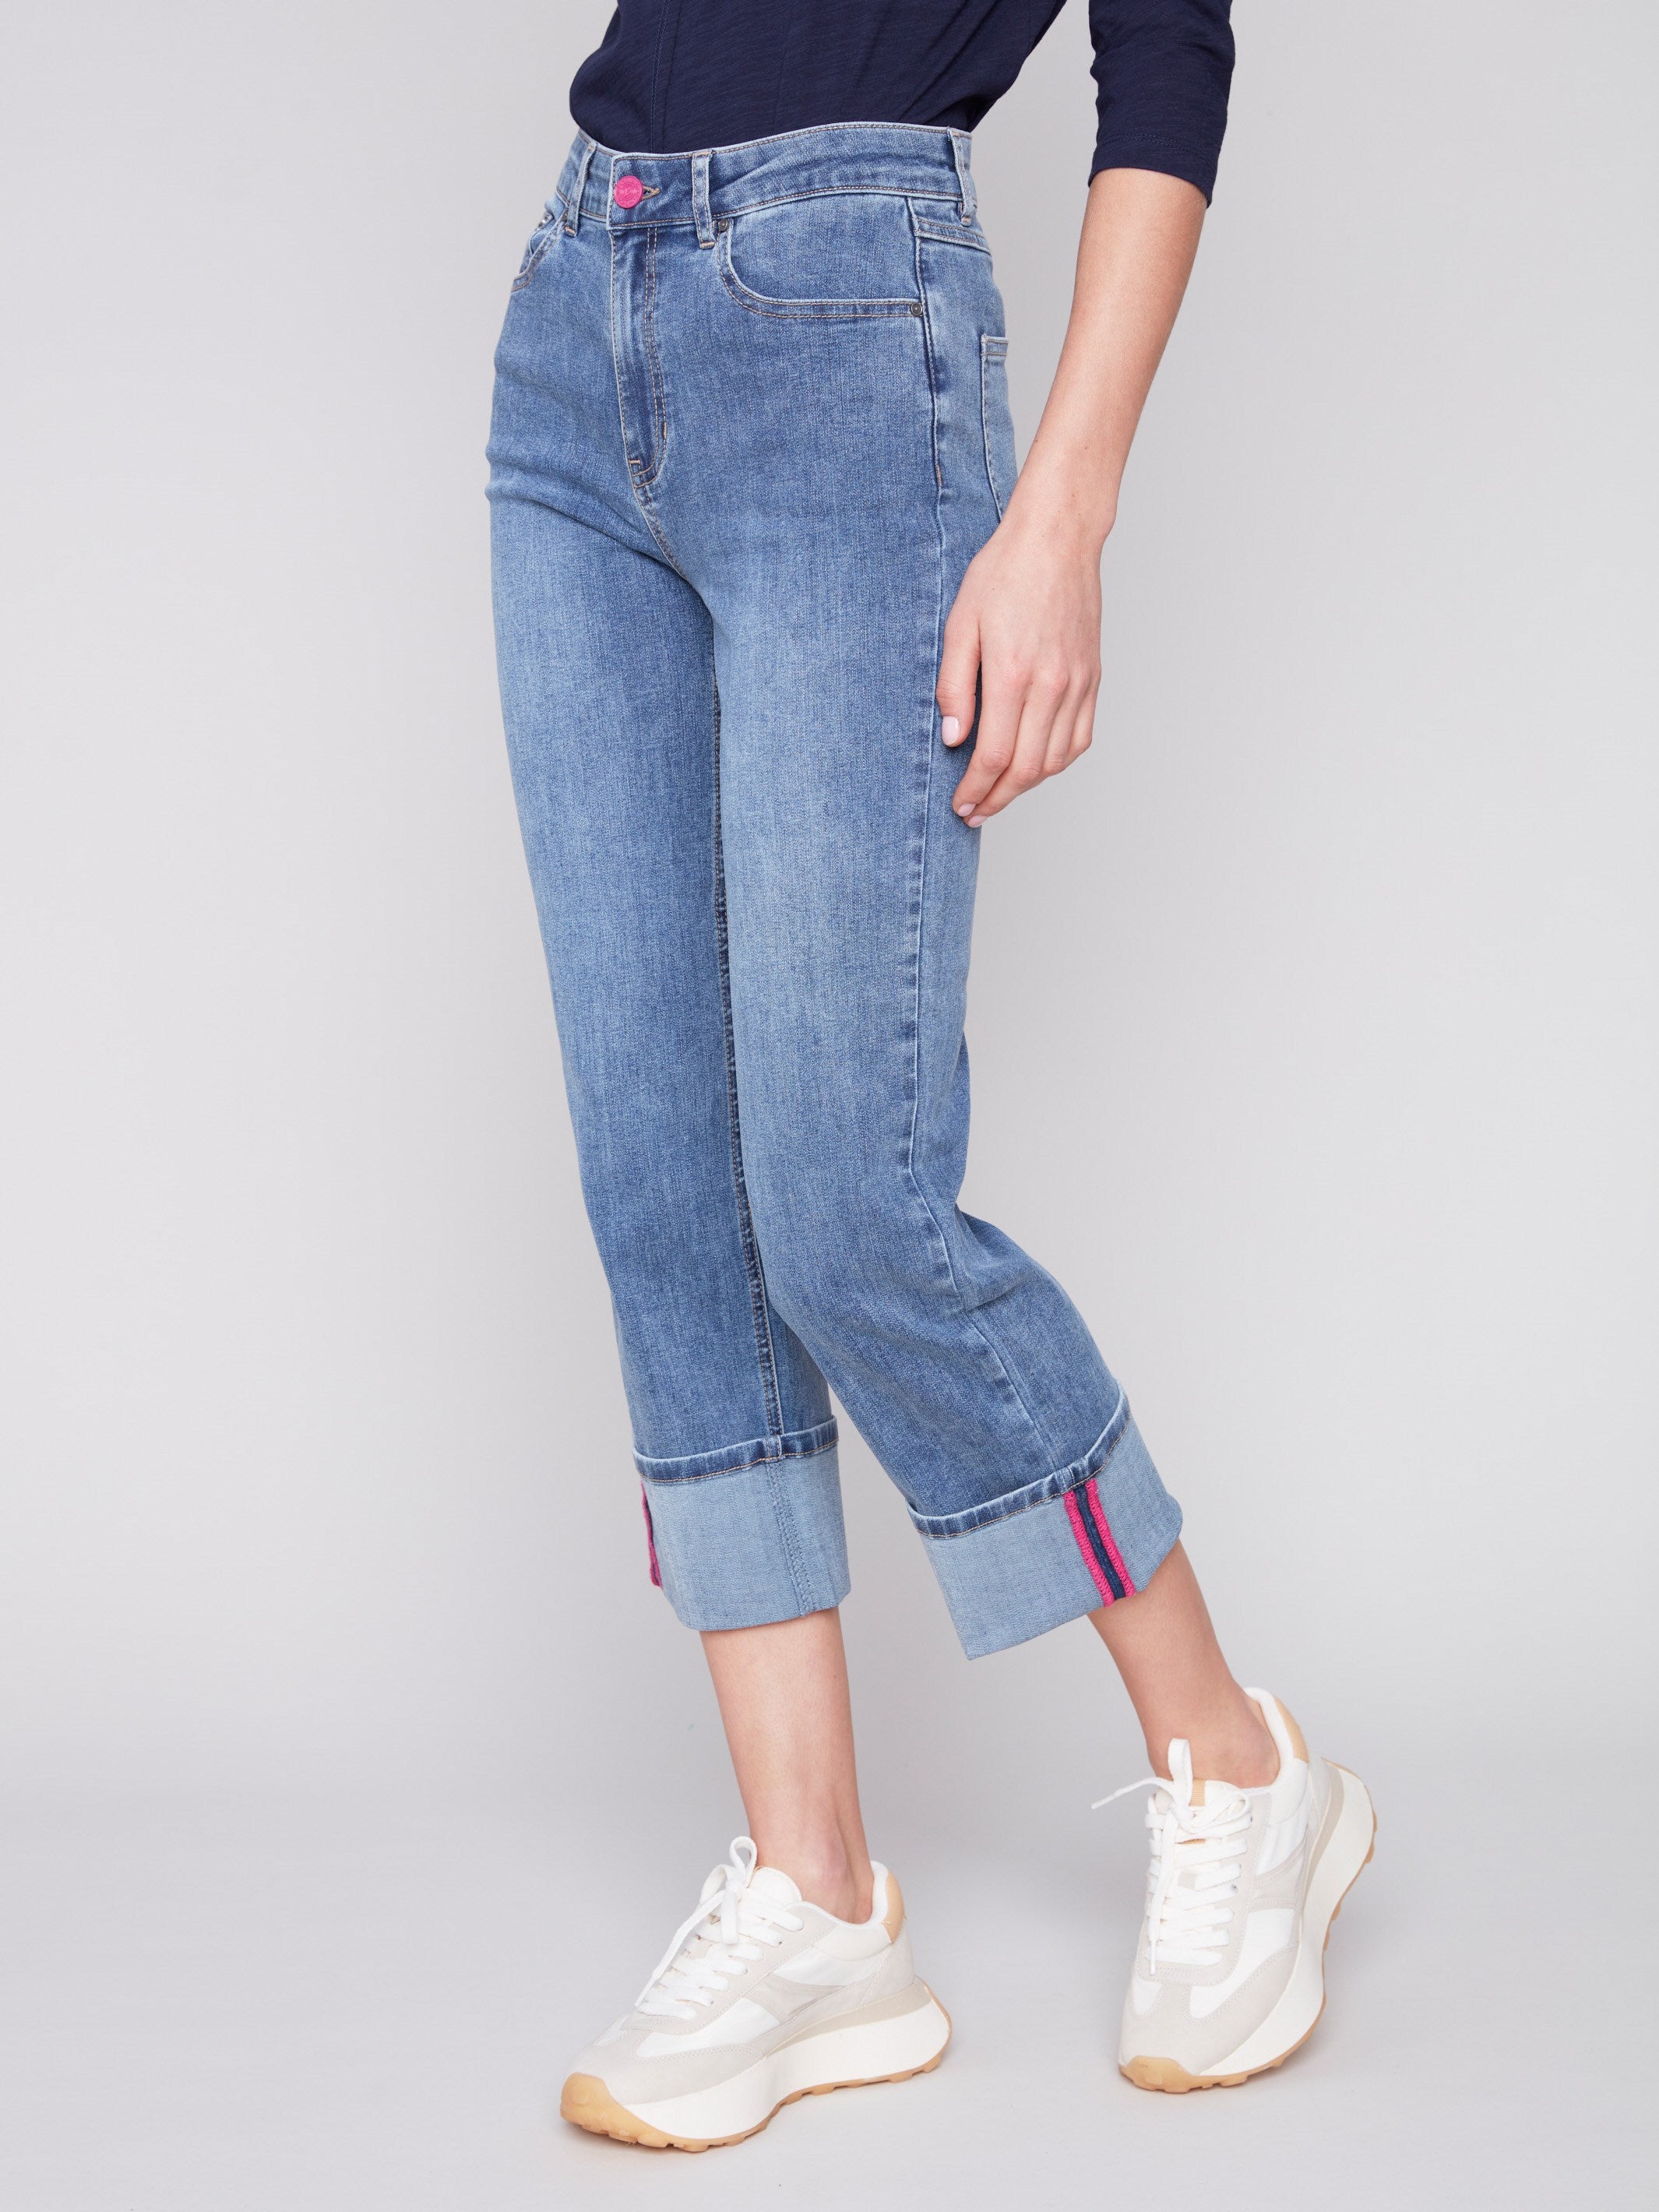 Charlie B Straight Leg Jeans with Folded Cuff - Medium Blue - Image 2